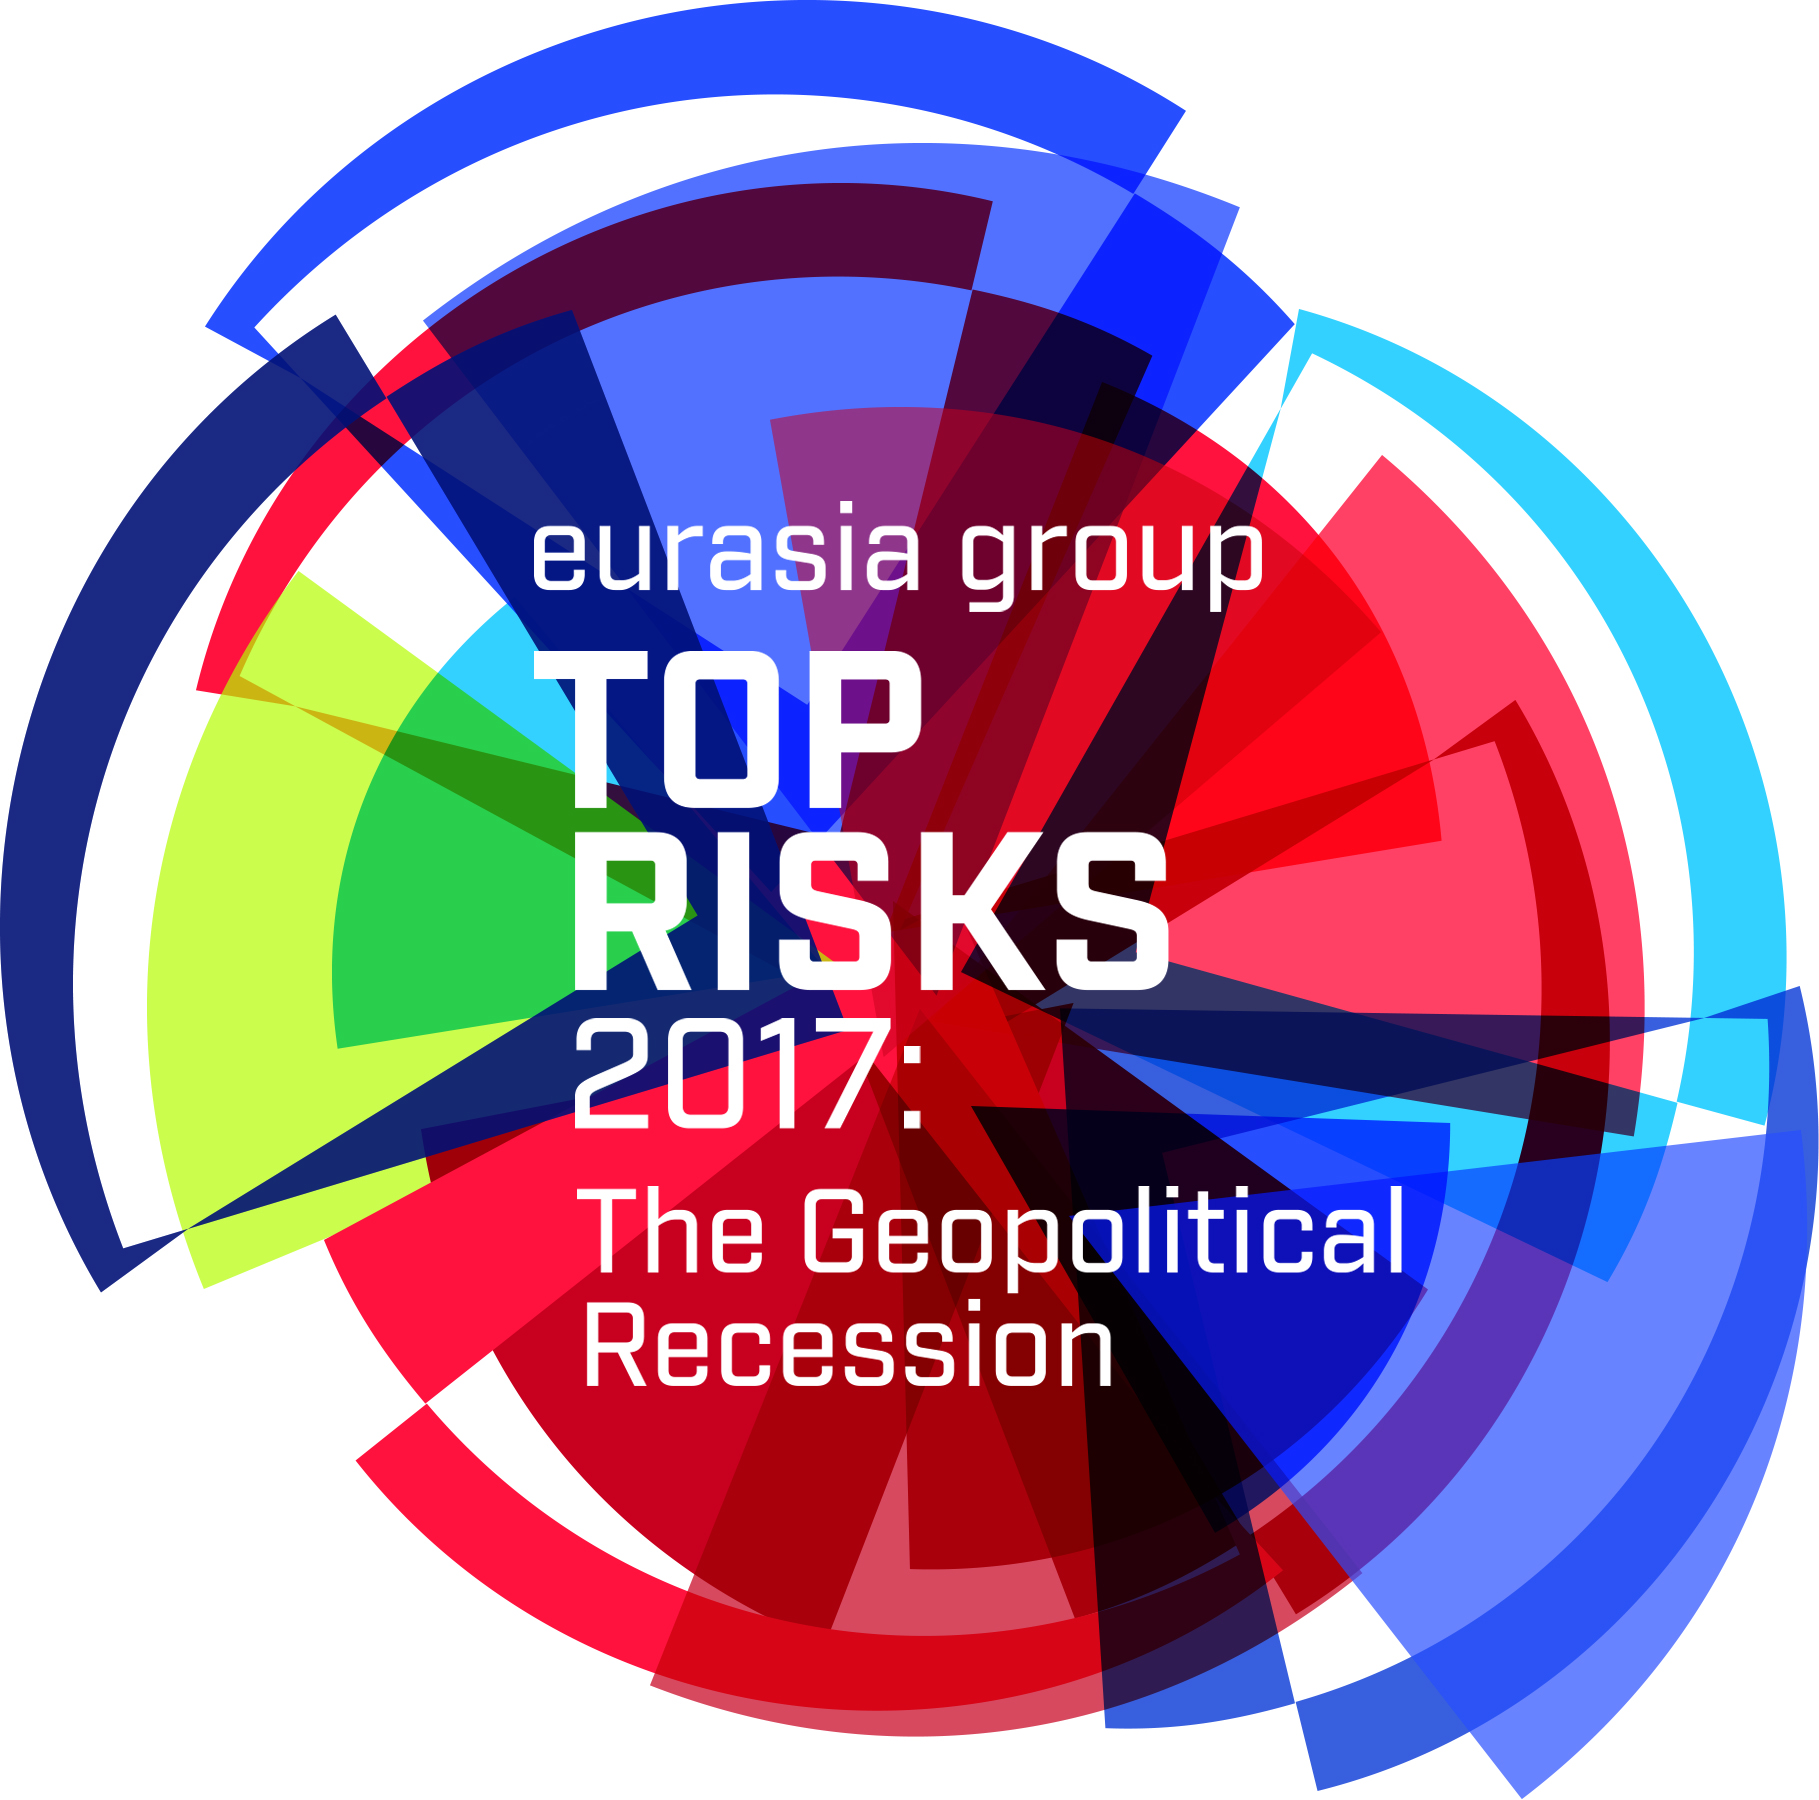 Eurasia Group Publishes Top Risks for 2017, Announces World Entering